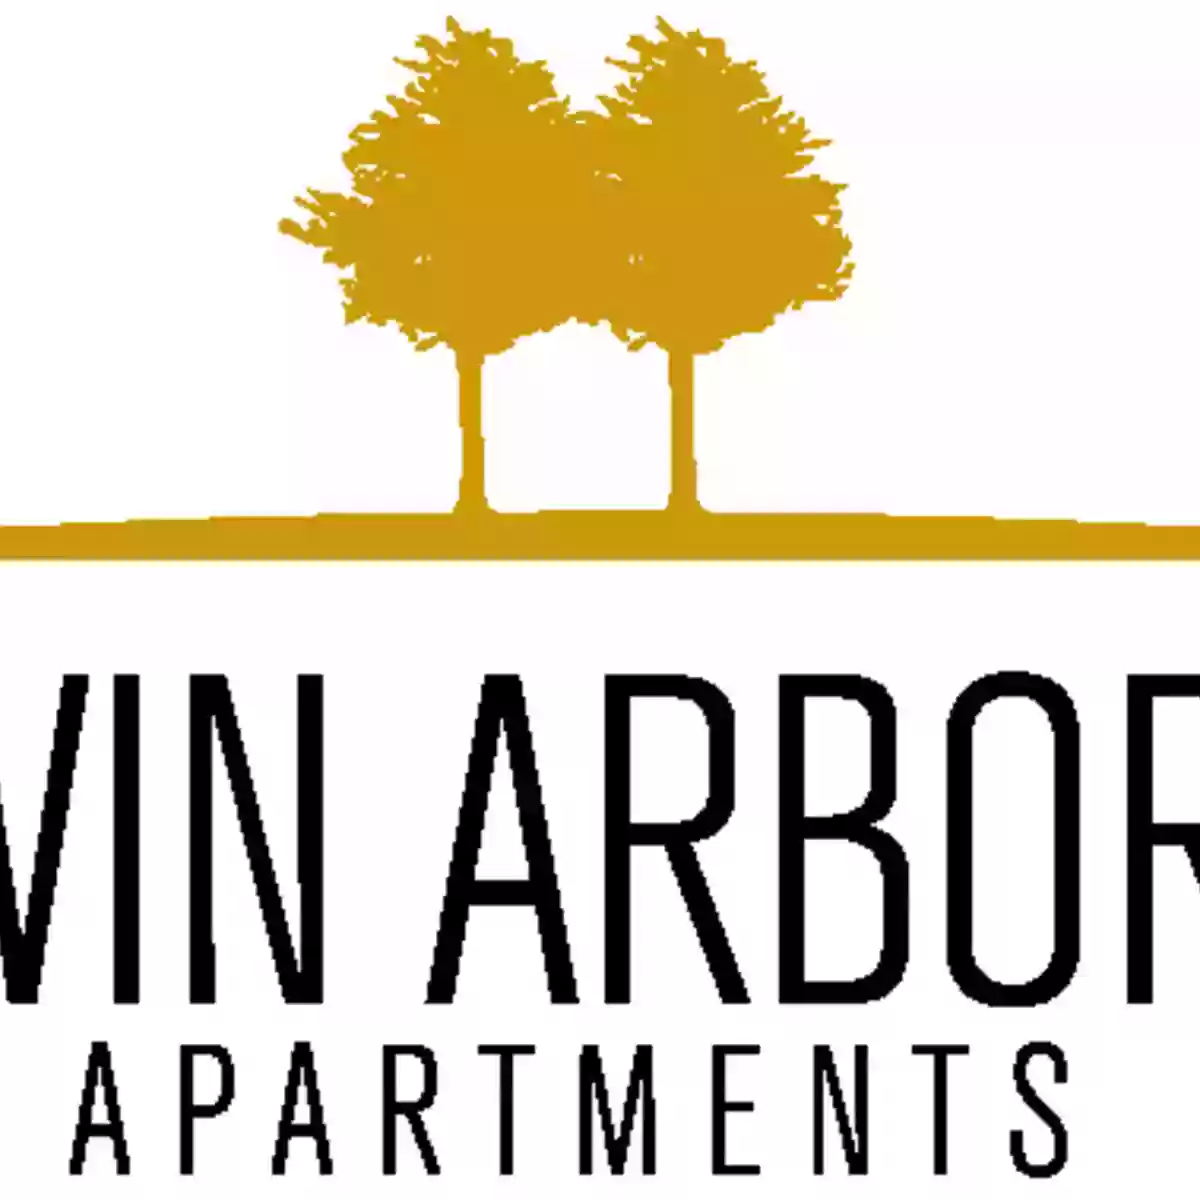 Twin Arbors Apartments